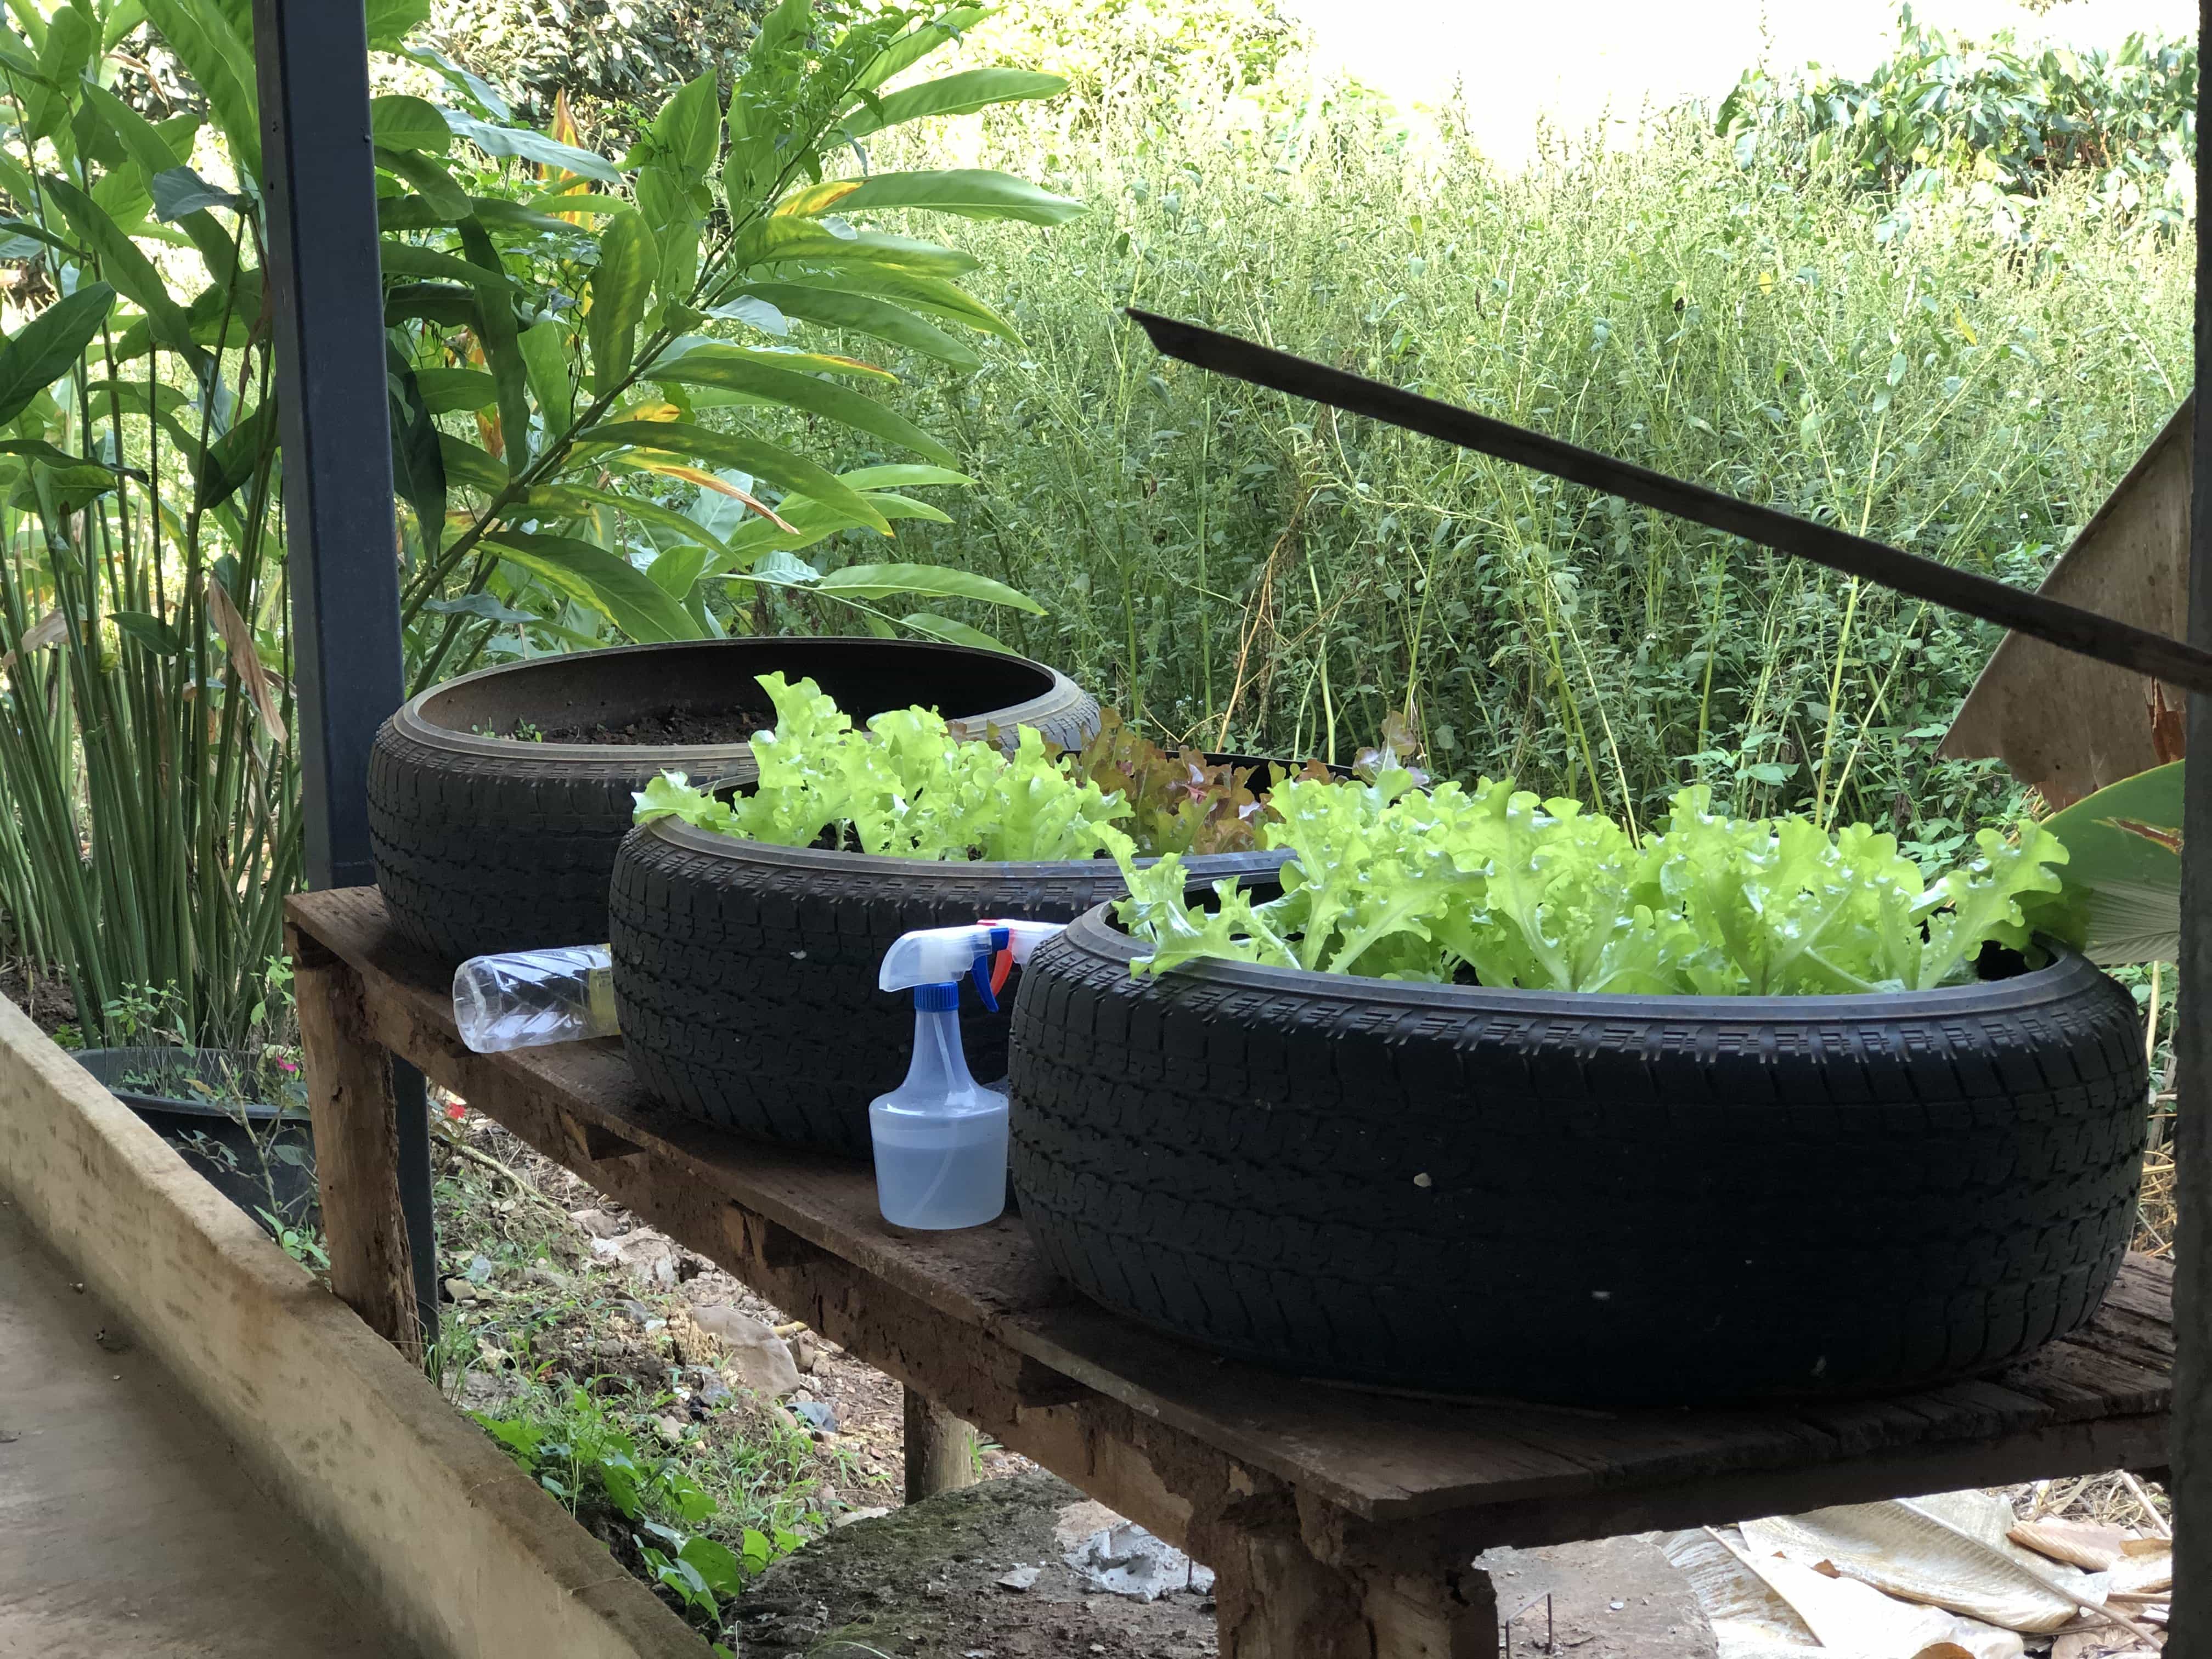 growing lettuce in tires